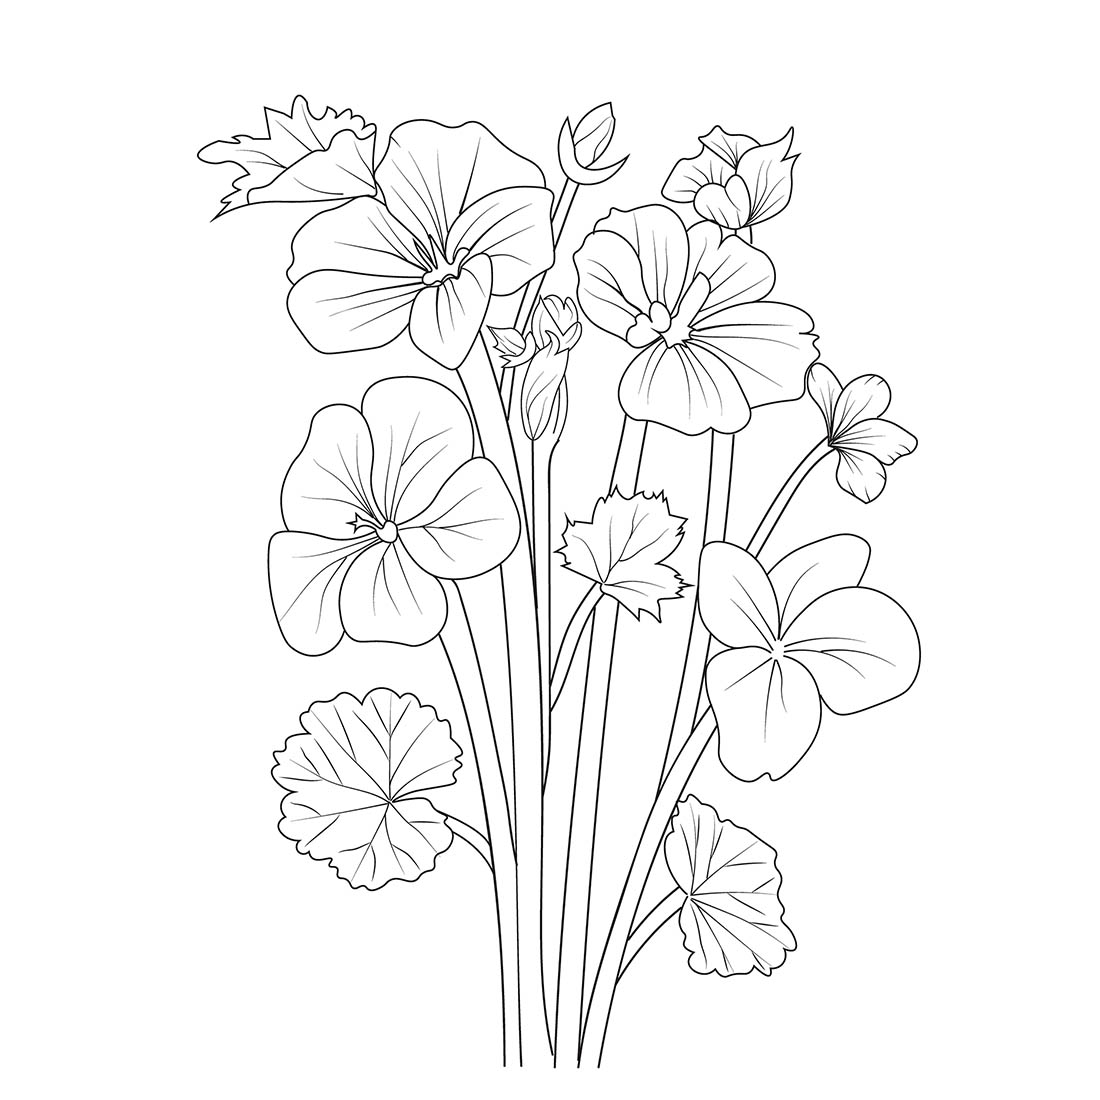 February birth flower, February primrose birth flower, February birth primrose drawings, primula flower drawing cover image.